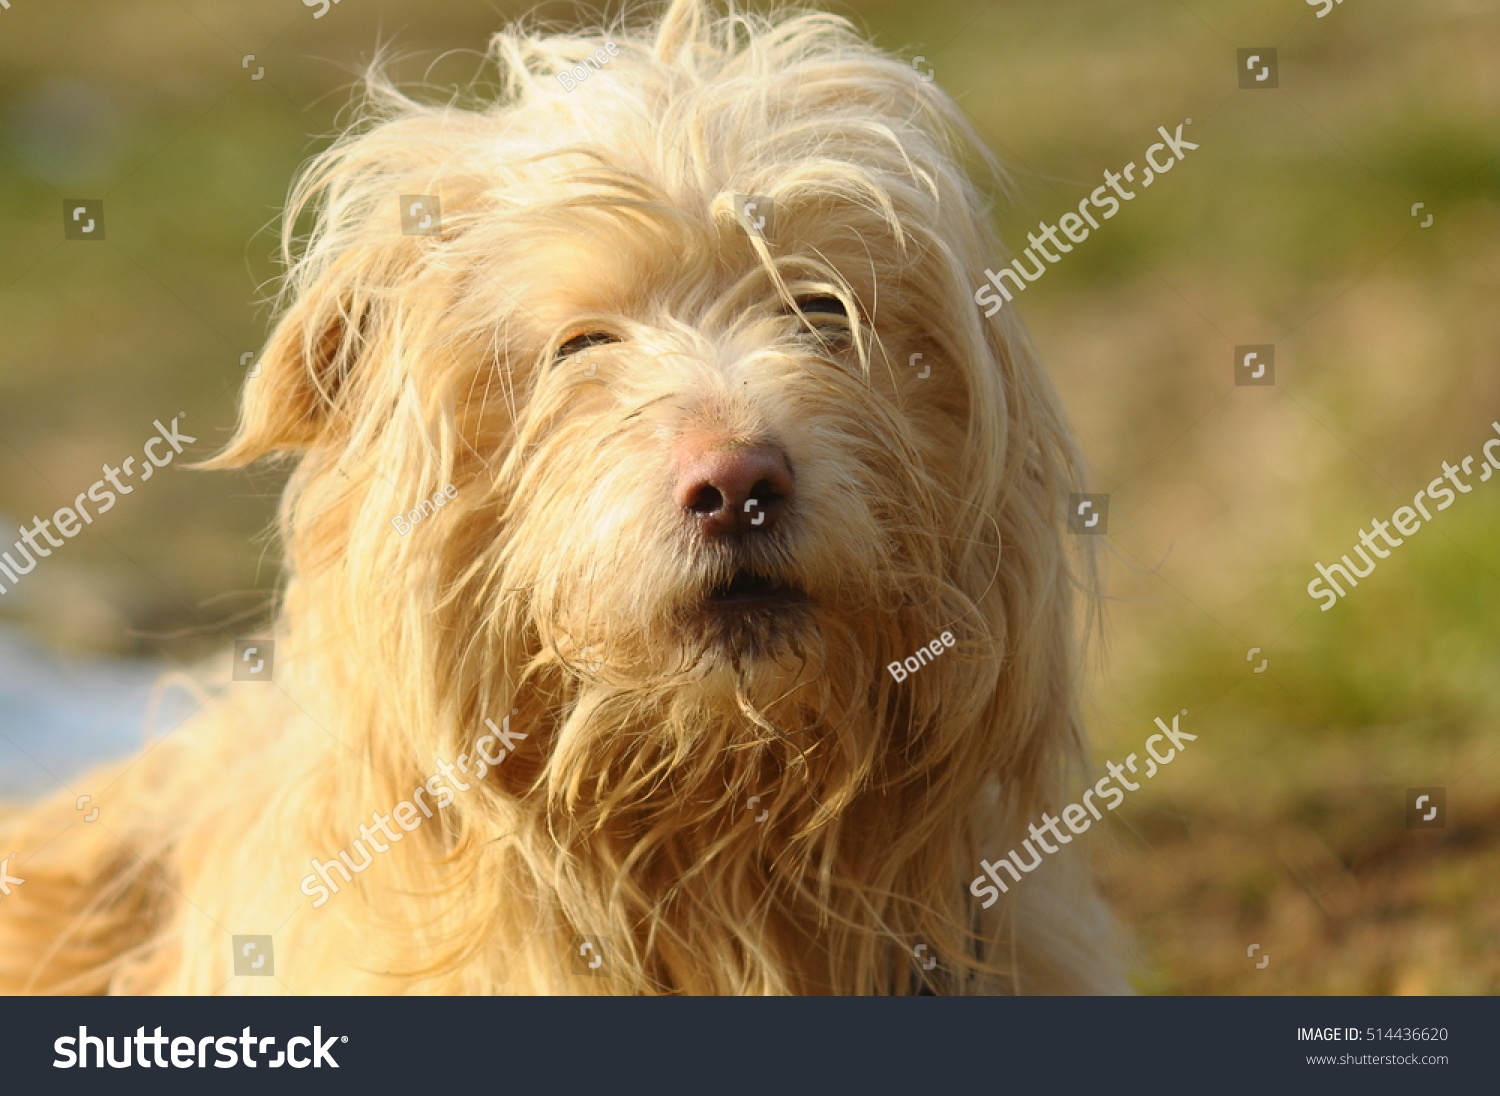 Blonde Hair Dog Portre Stock Photo 514436620 Avopix Com